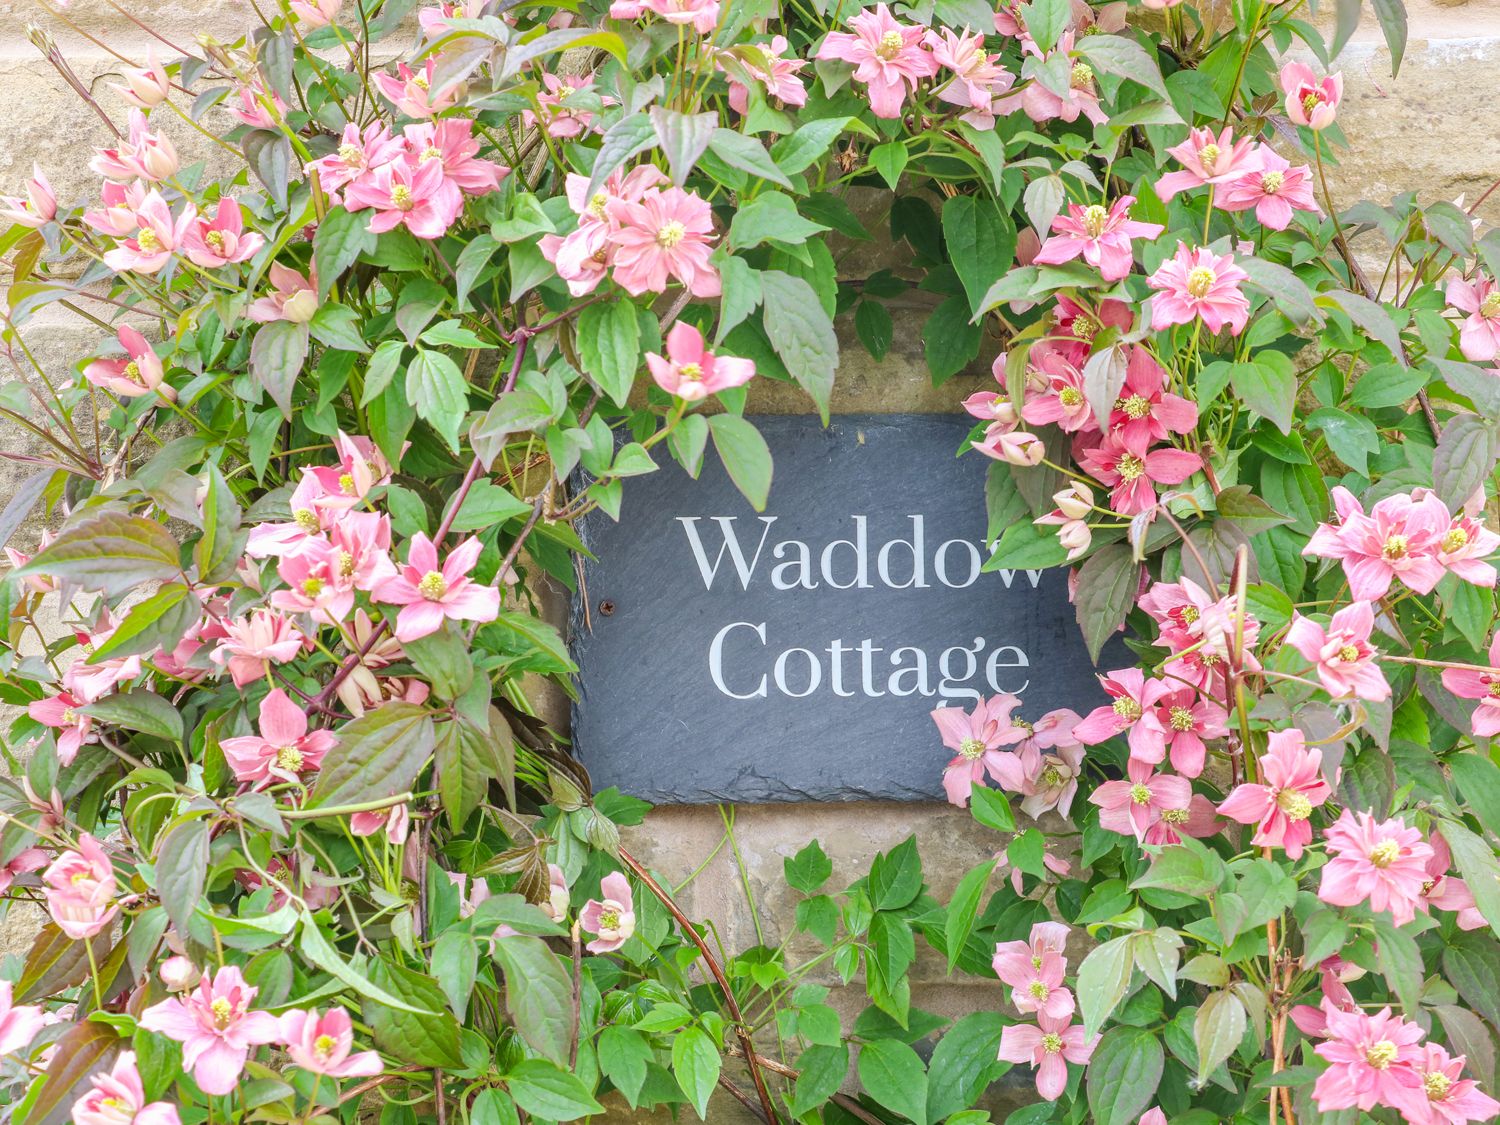 Waddow Cottage, Lancashire